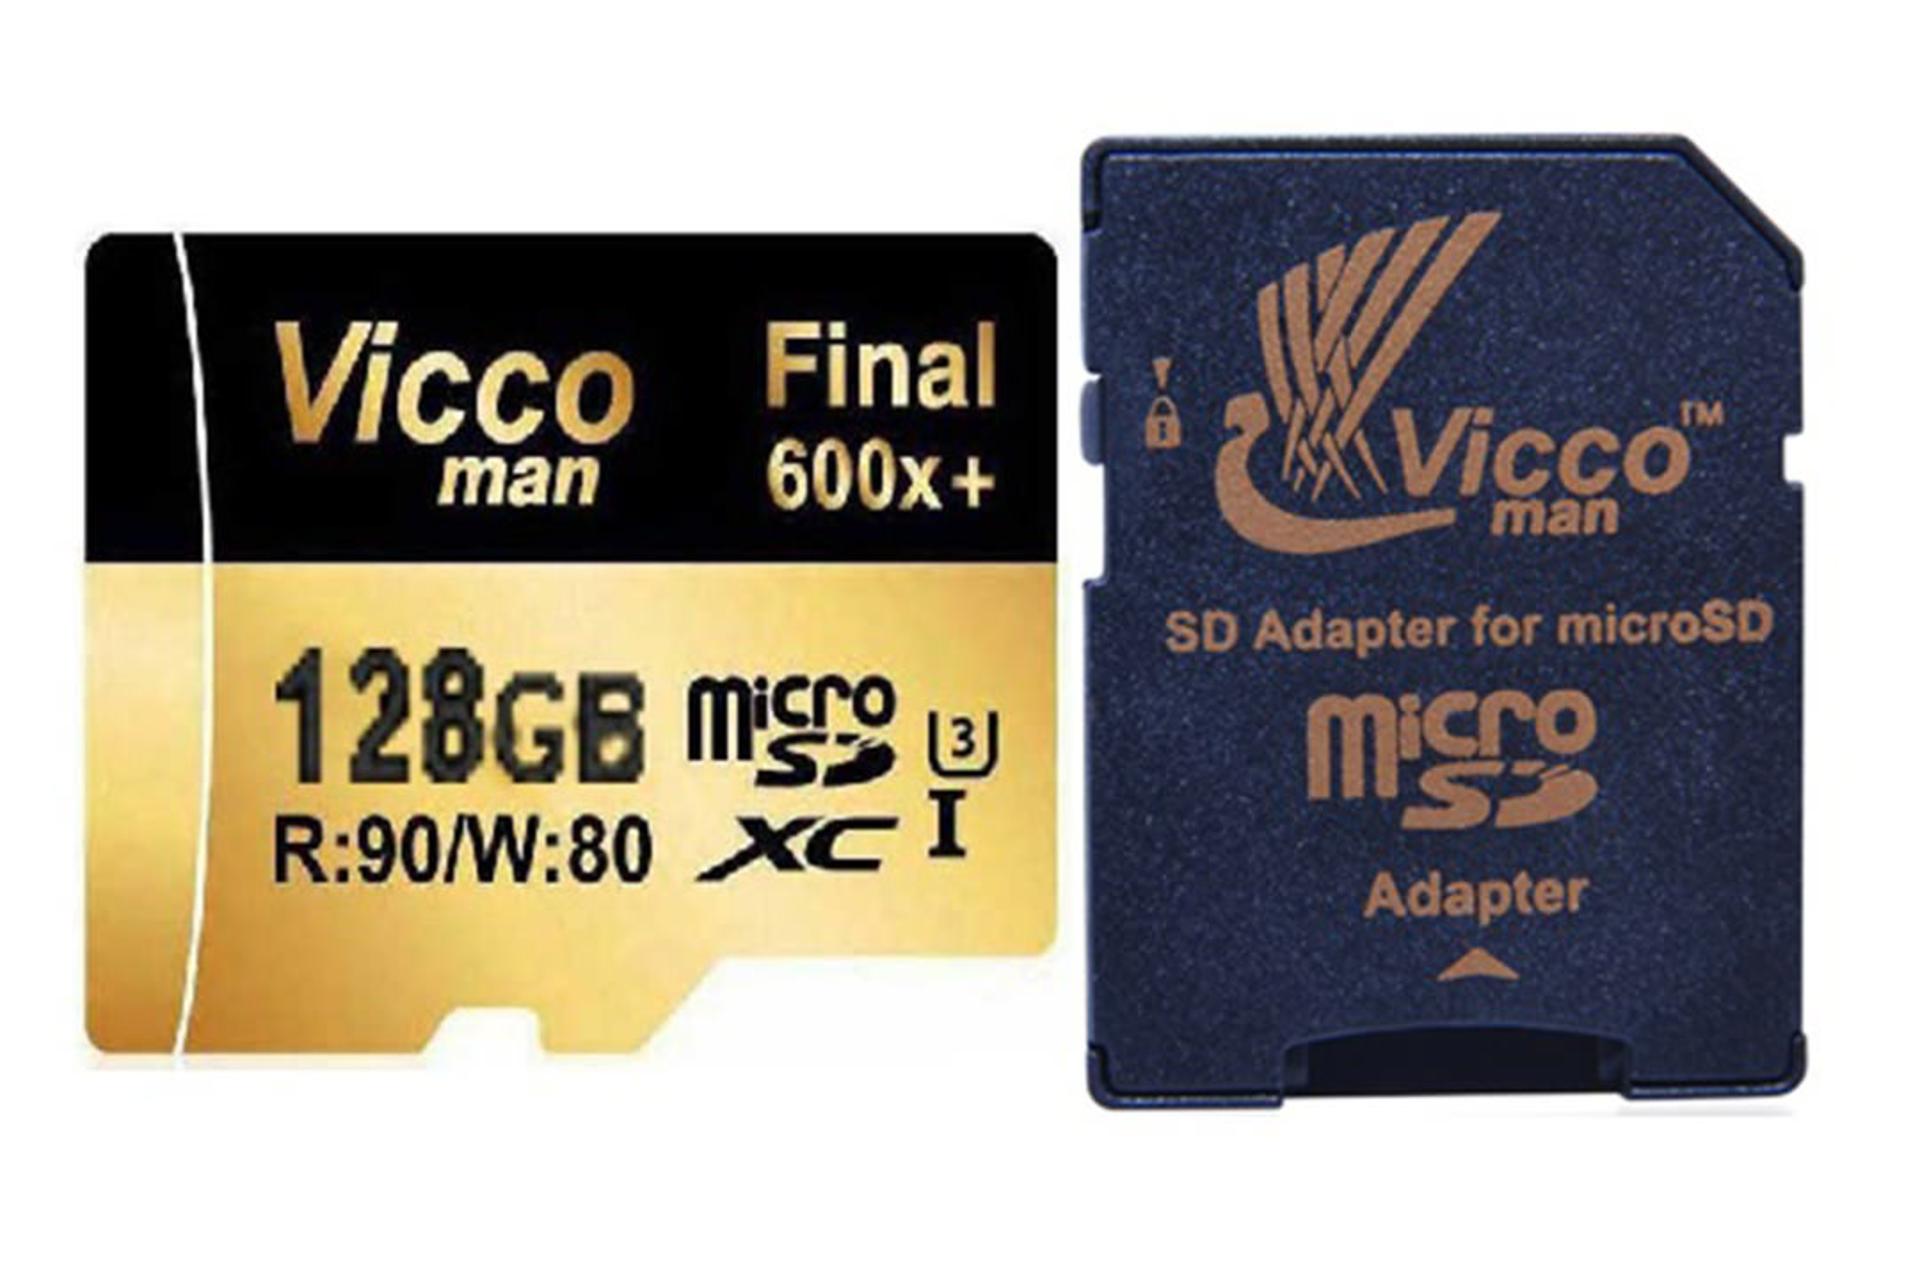 Viccoman Final 600x microSDHC Class 10 UHS-I U3 128GB